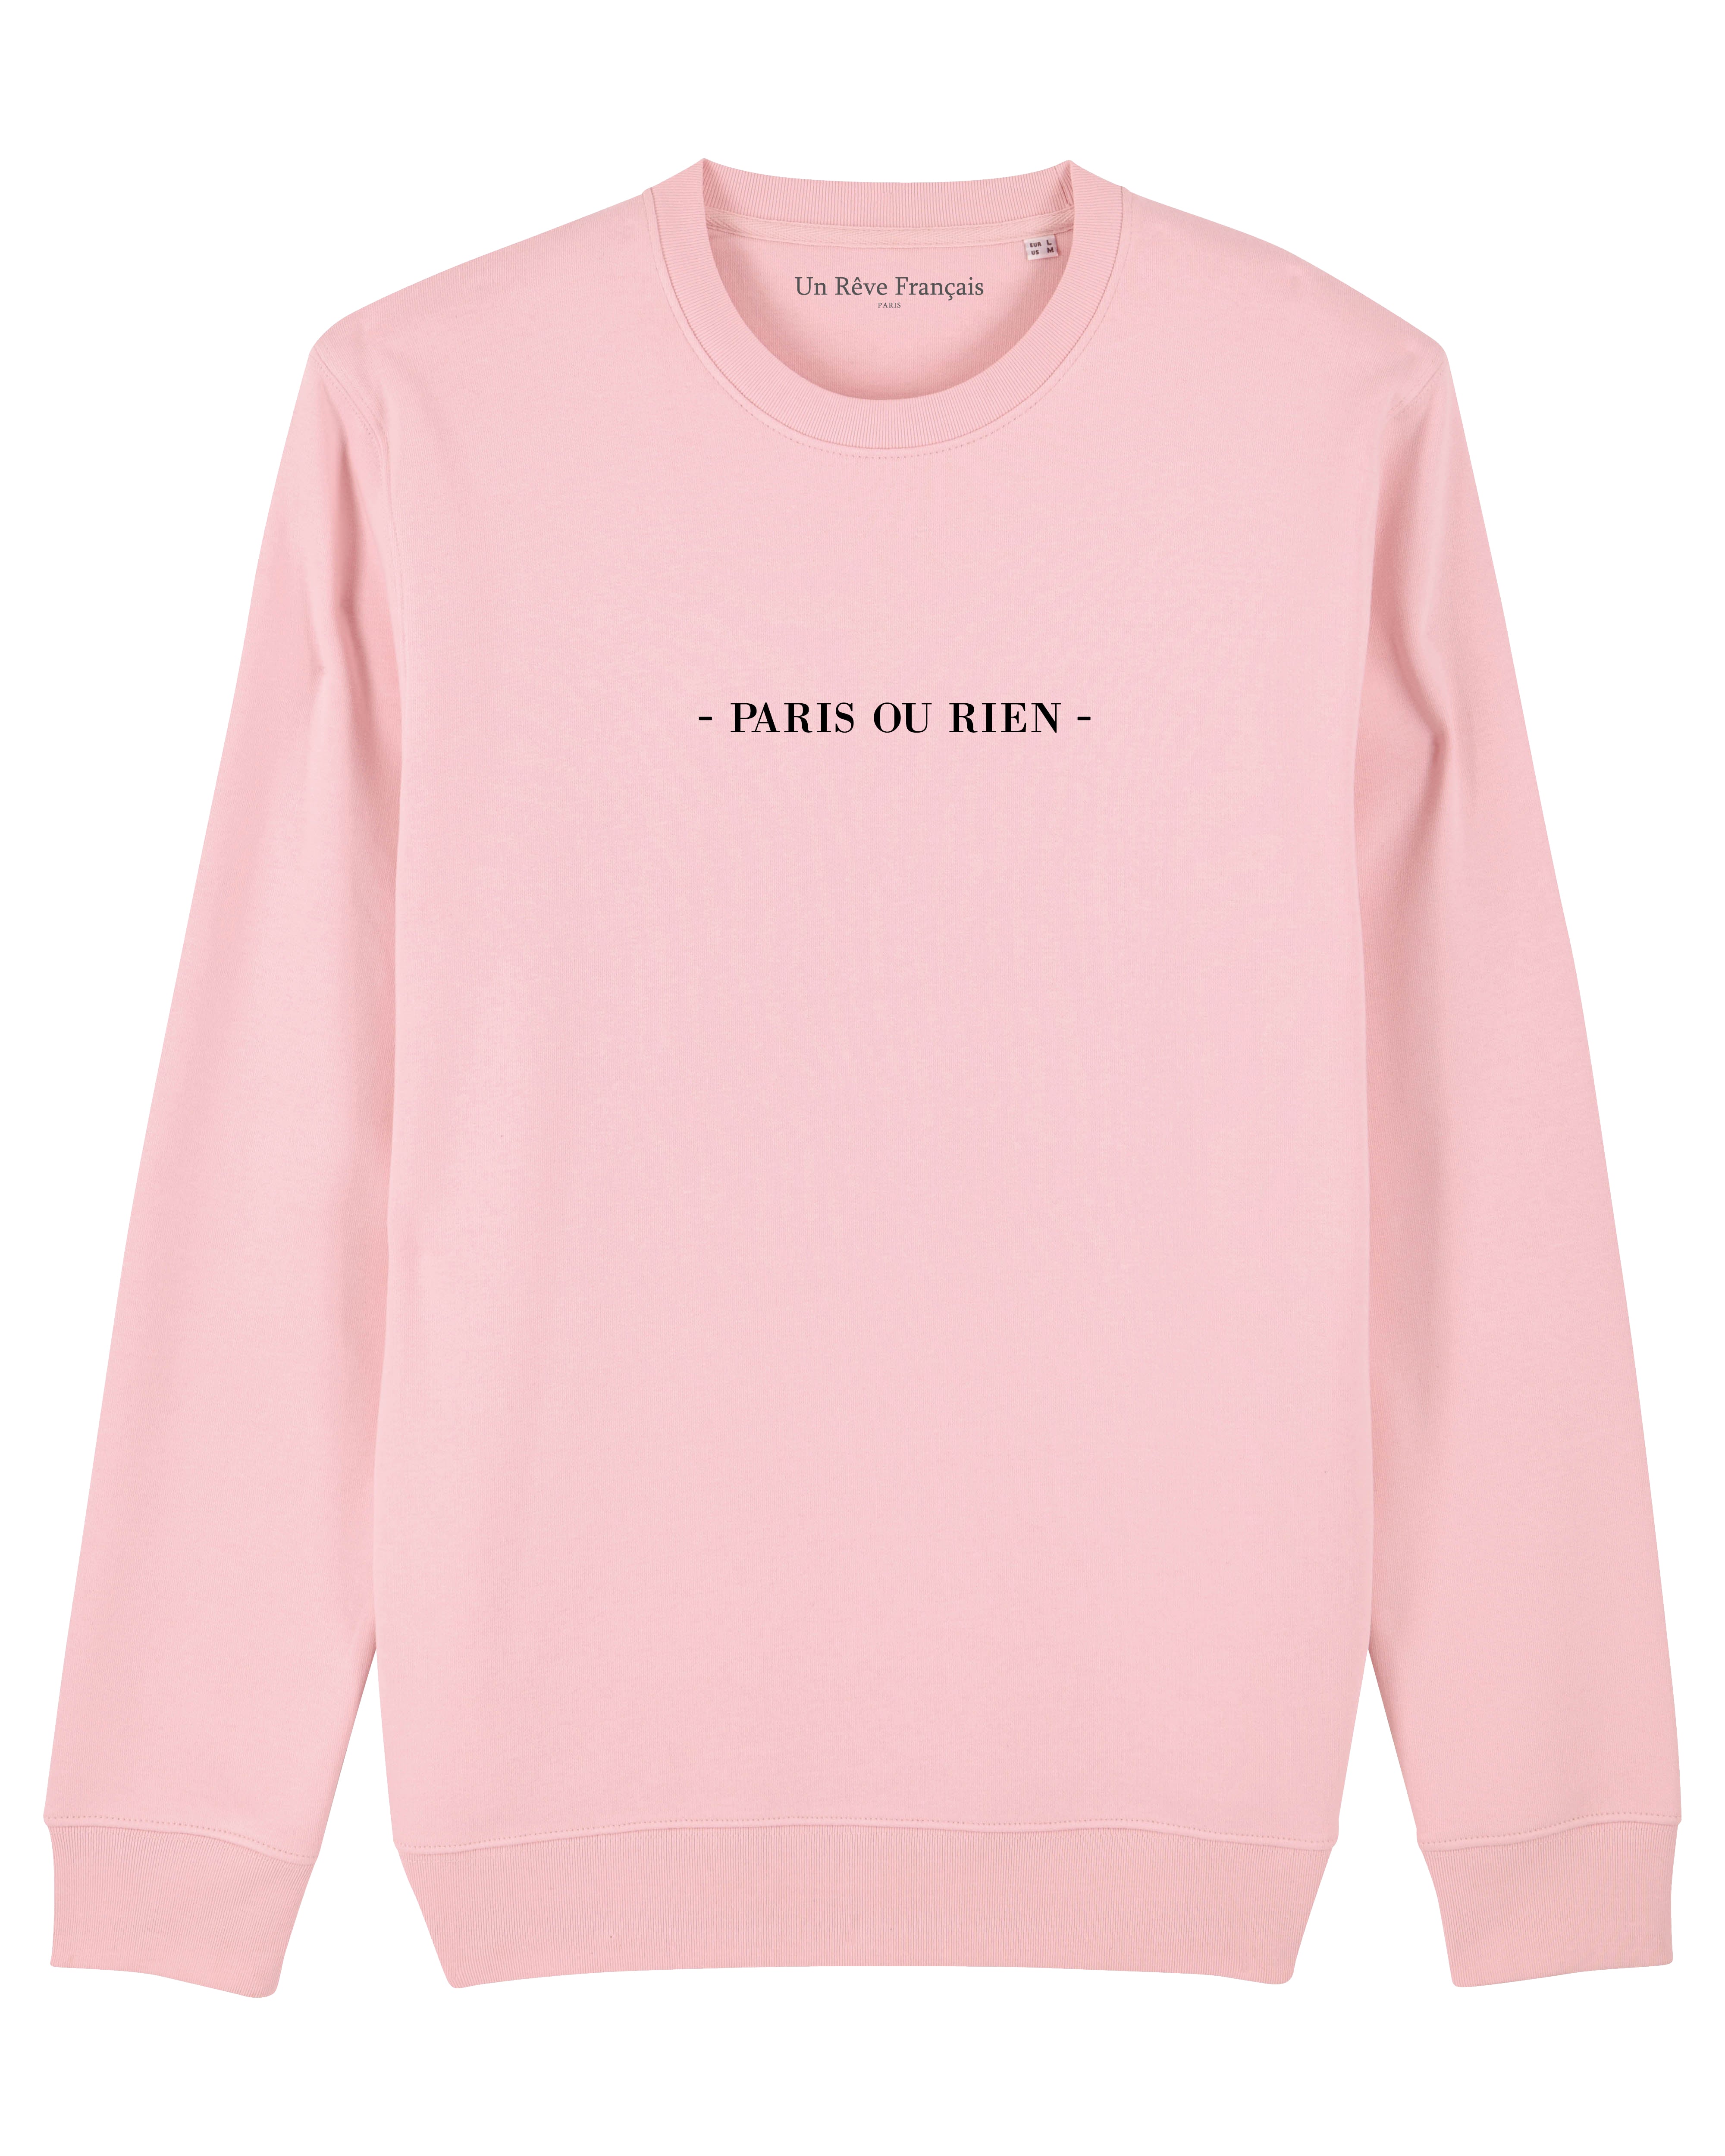 Sweatshirt "Paris ou rien"